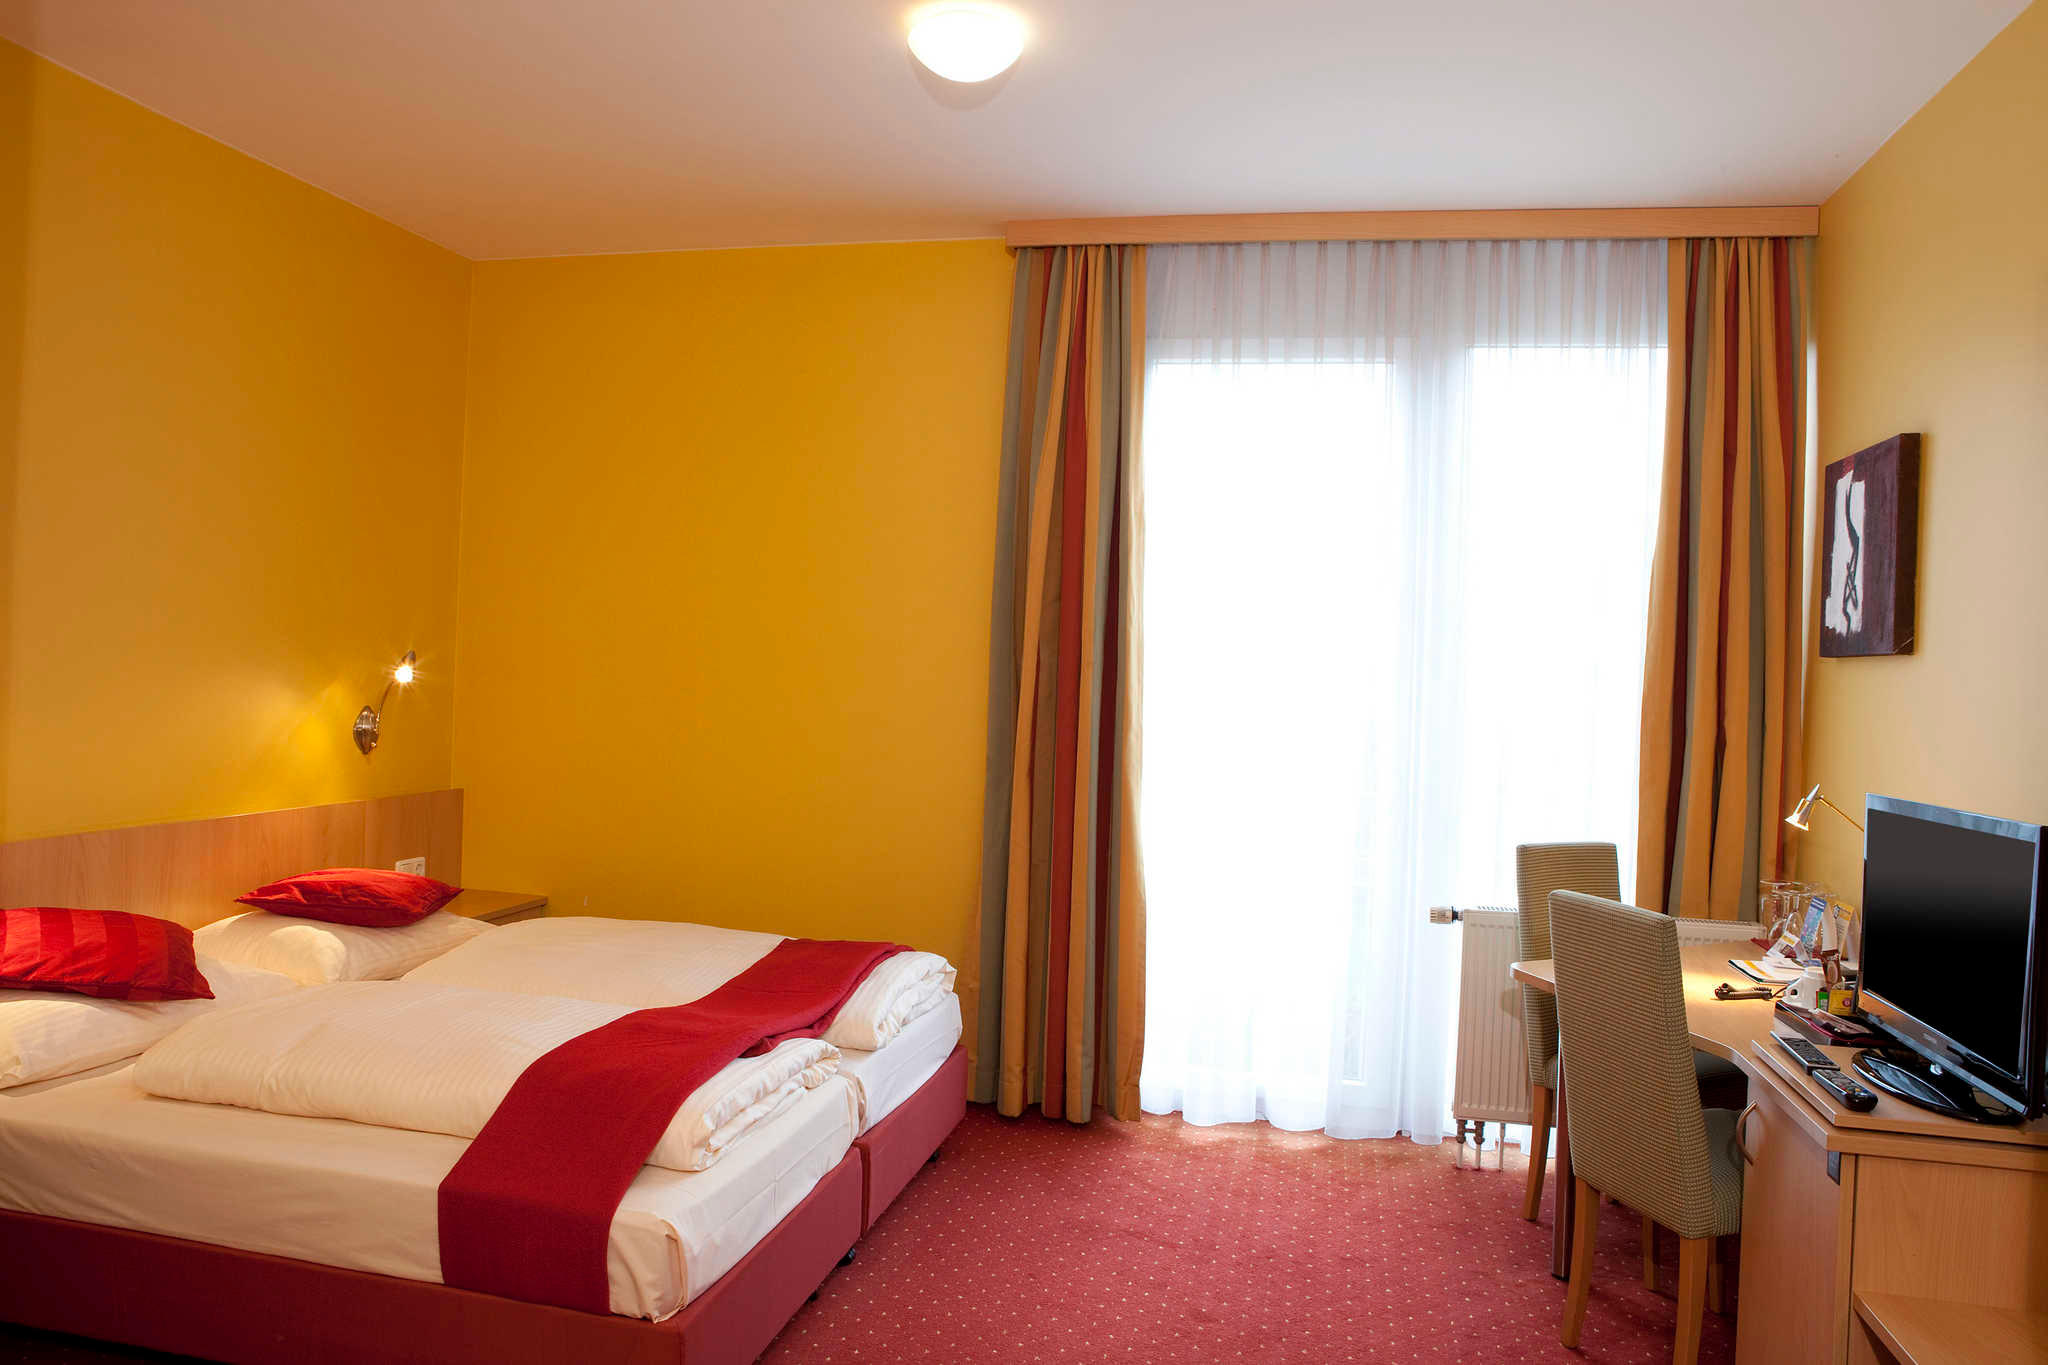 Quality Hotel & Suites Muenchen Messe, Johann-Karg-Strasse 3 in Haar